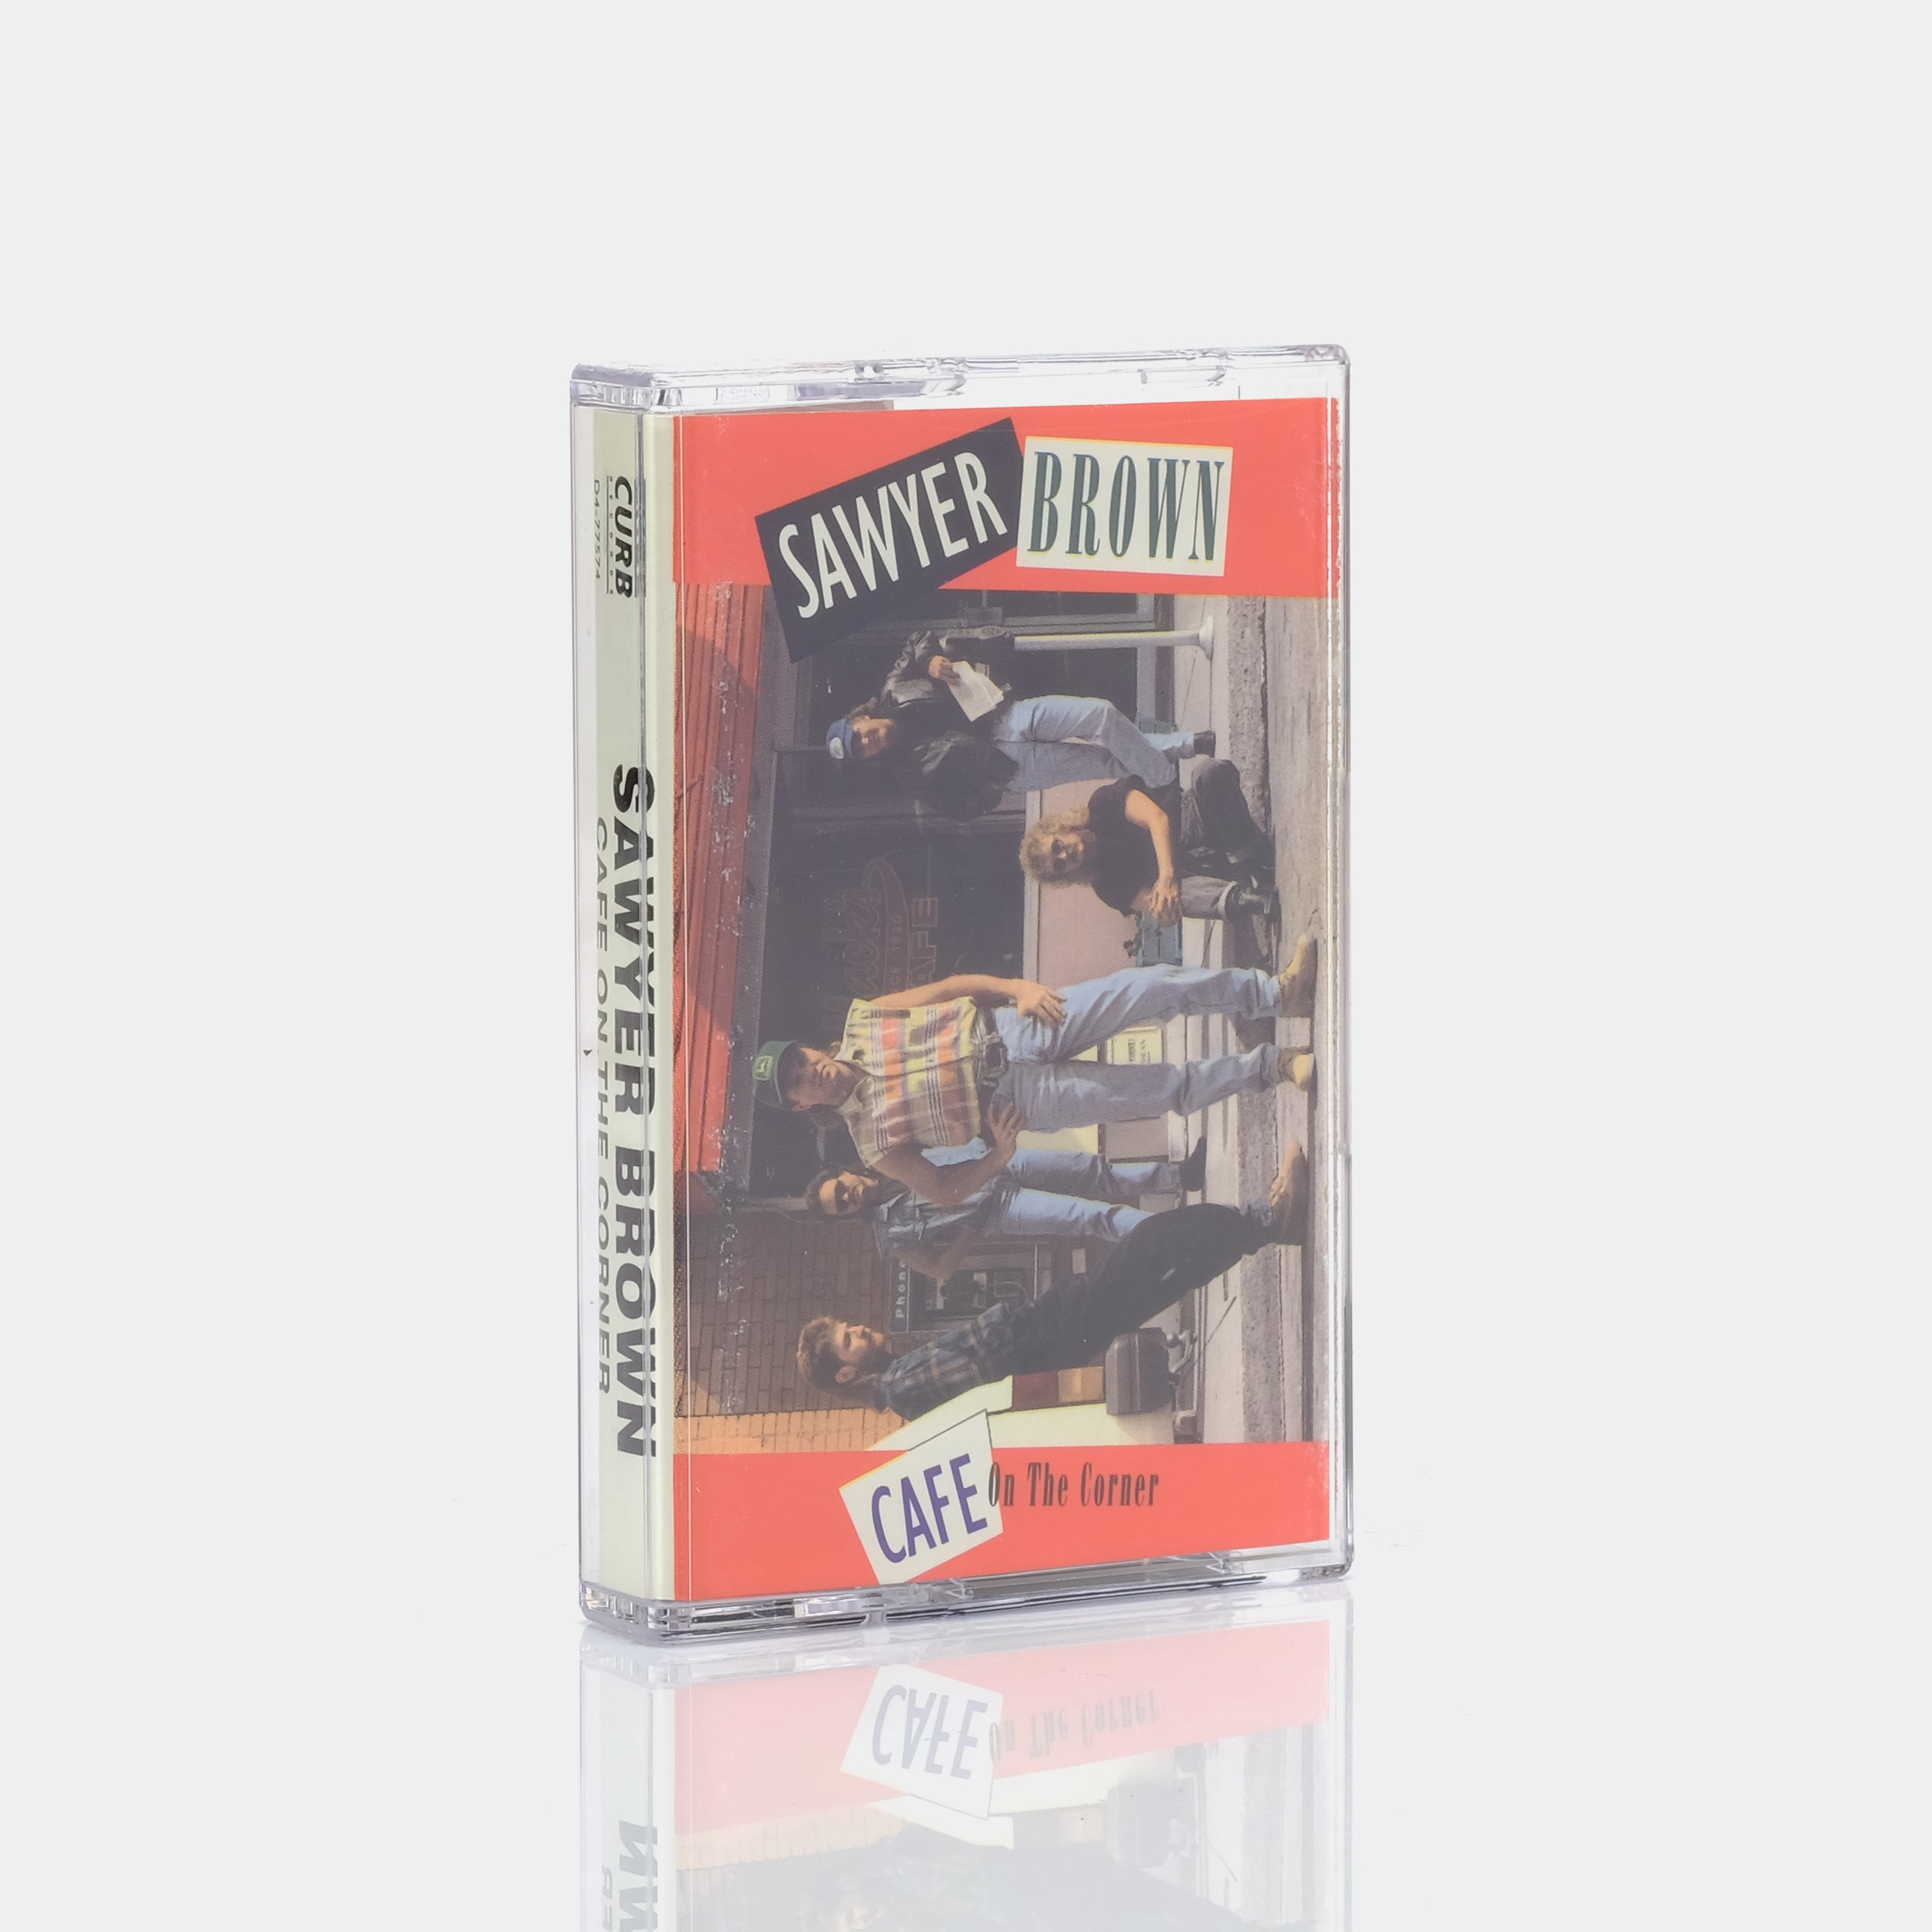 Sawyer Brown - Cafe On The Corner Cassette Tape